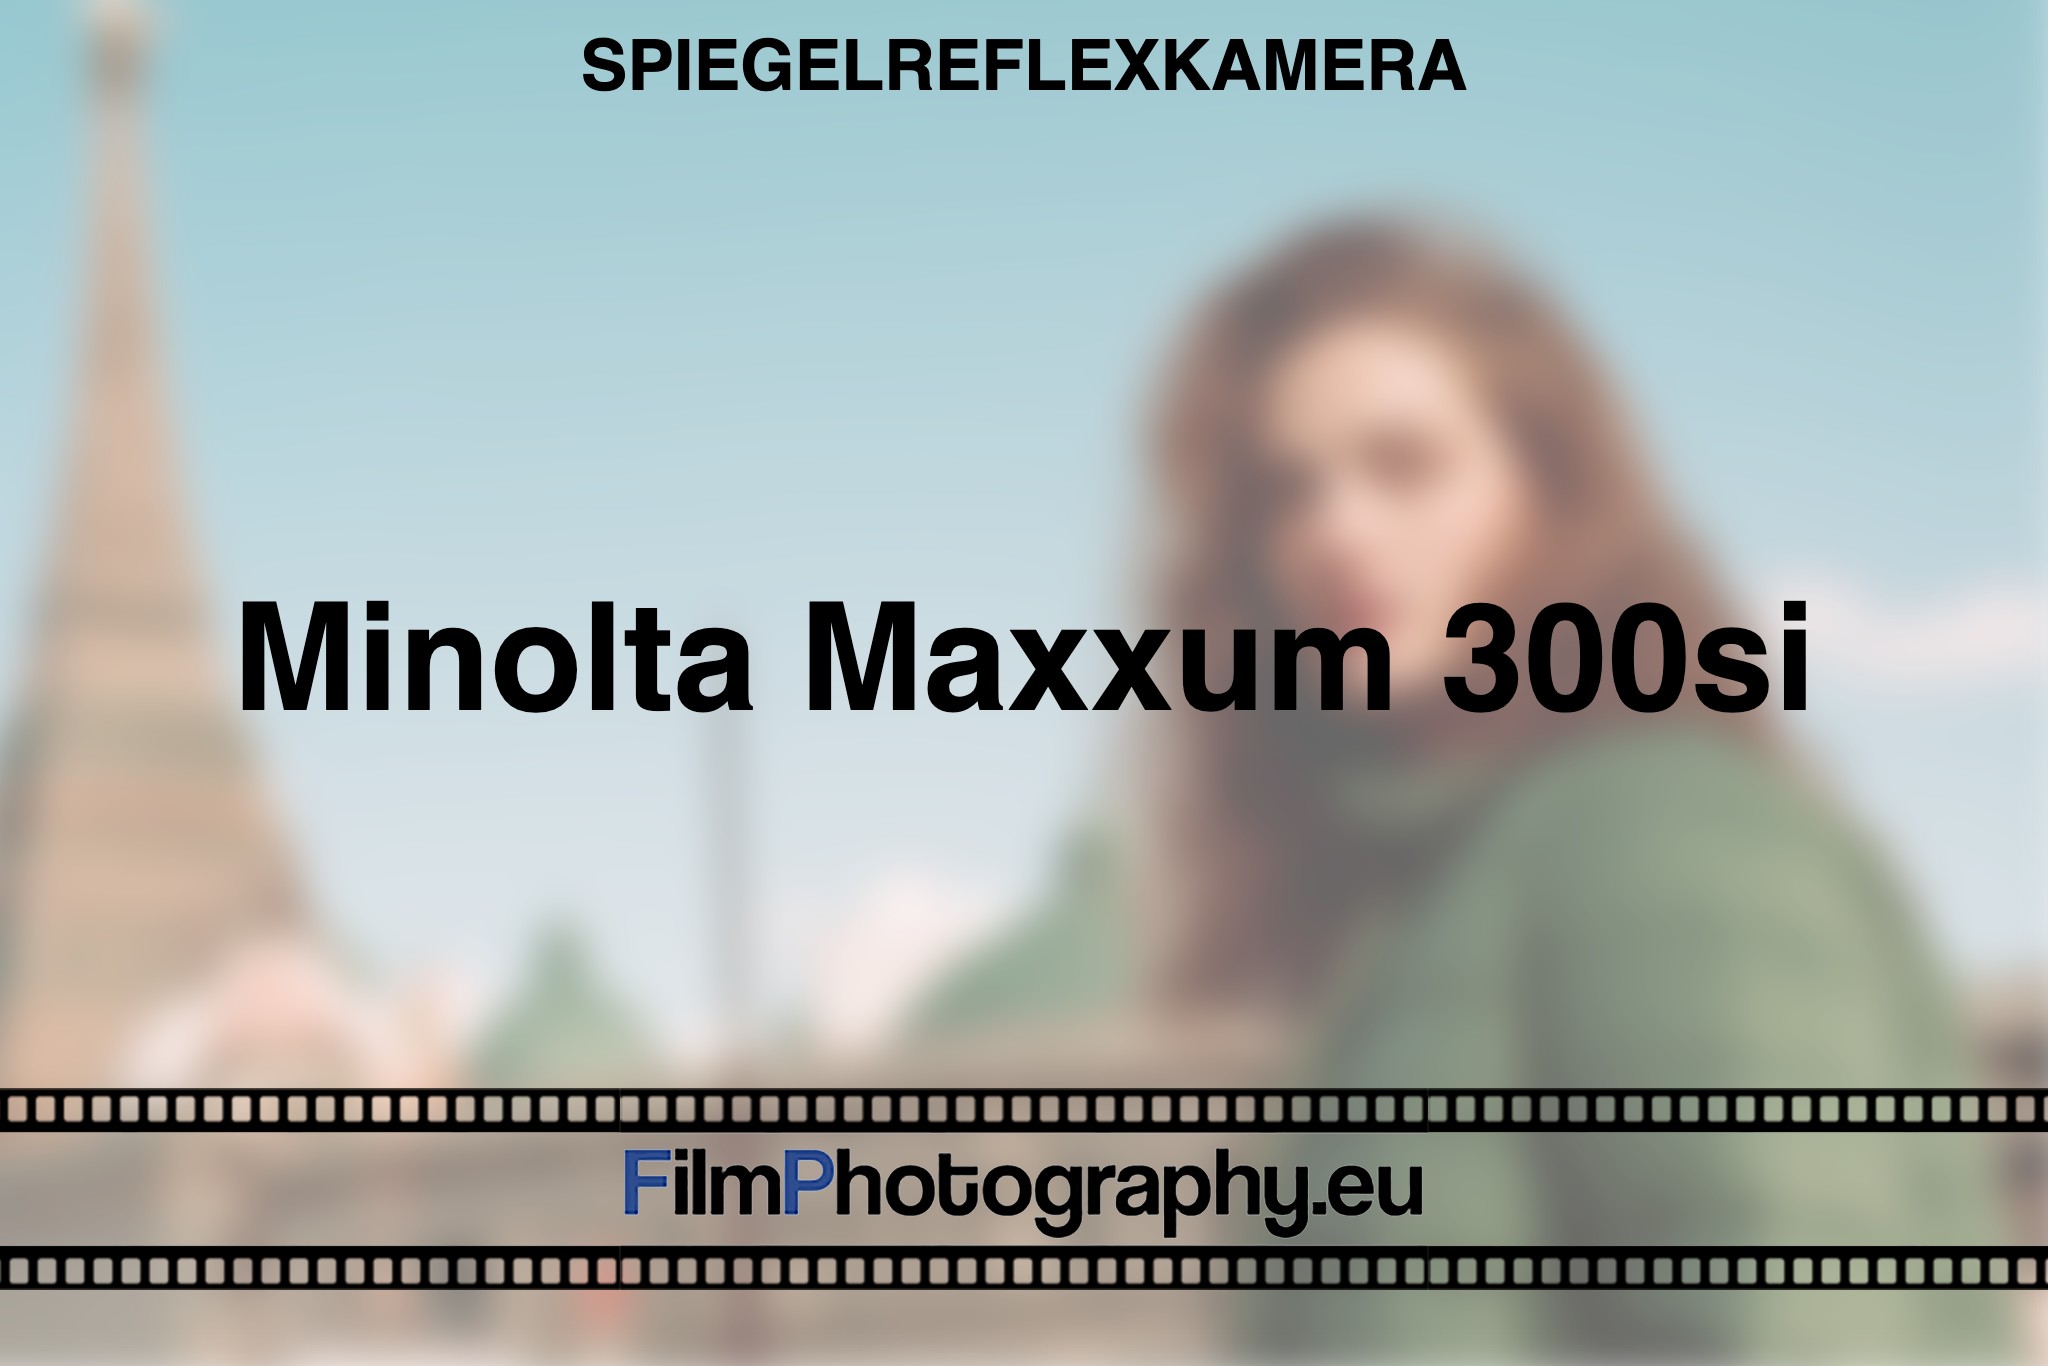 minolta-maxxum-300si-spiegelreflexkamera-bnv